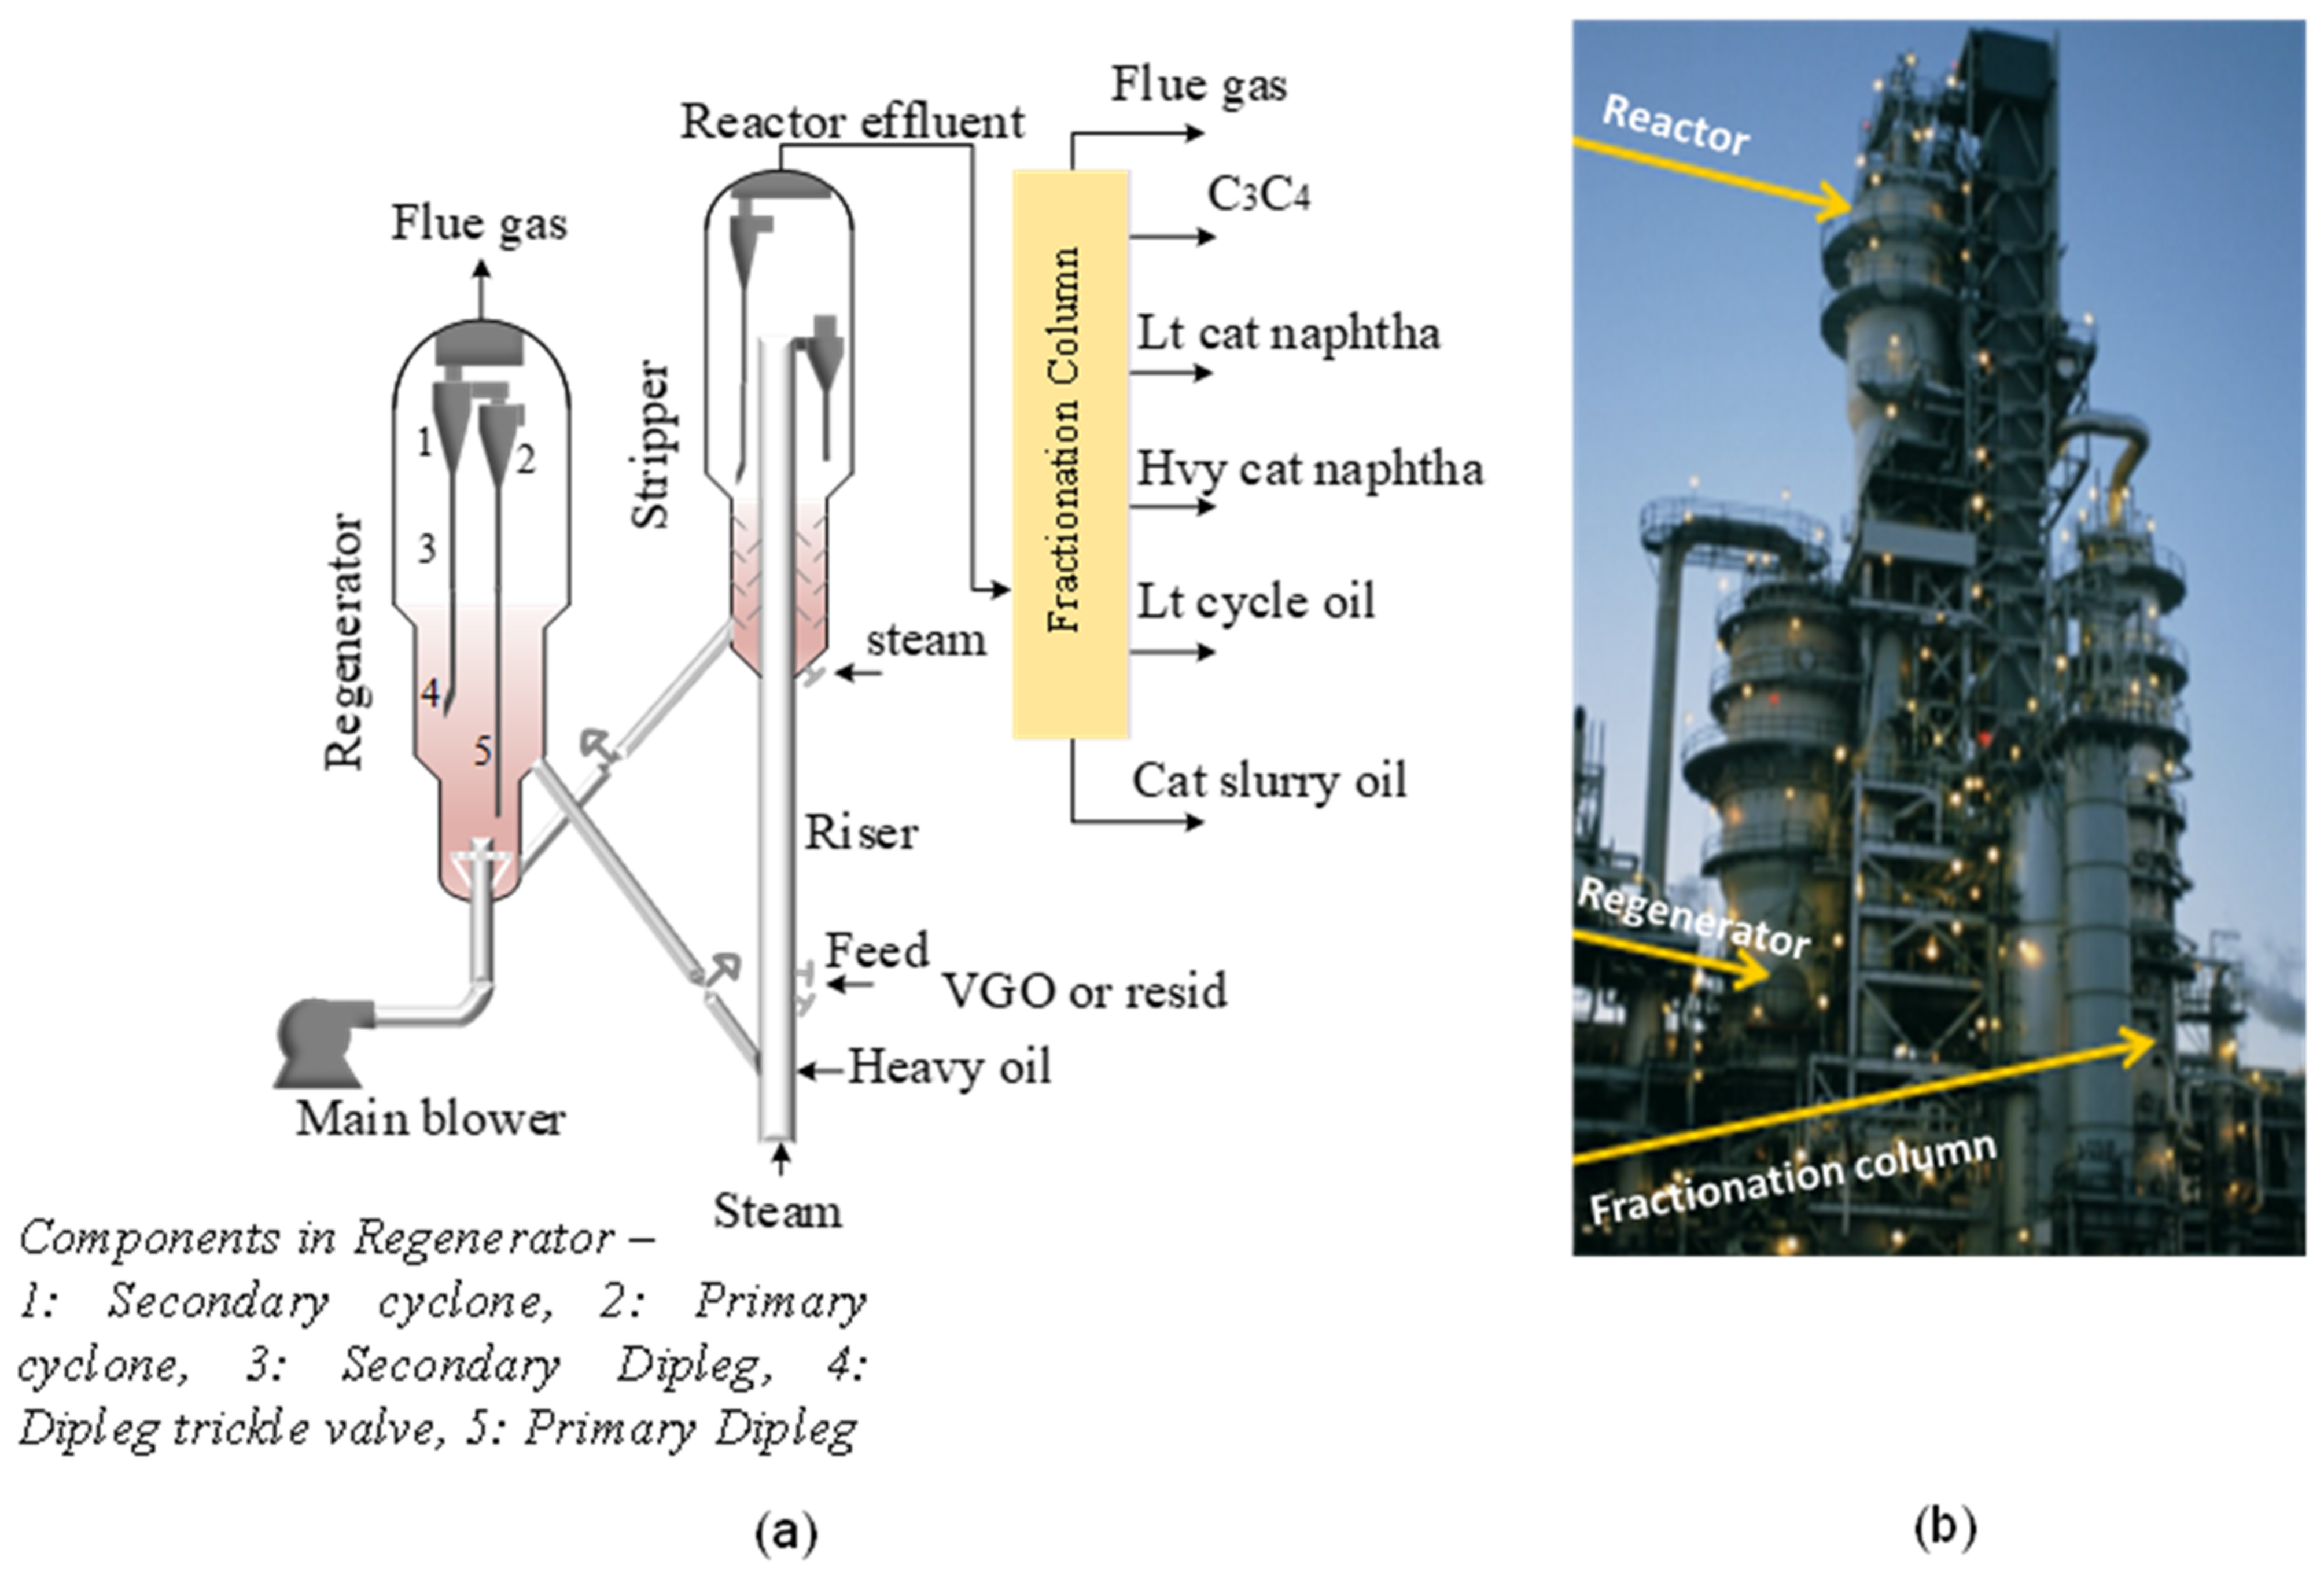 Heat Exchanger Leak Detection: Monitor for oil carryover